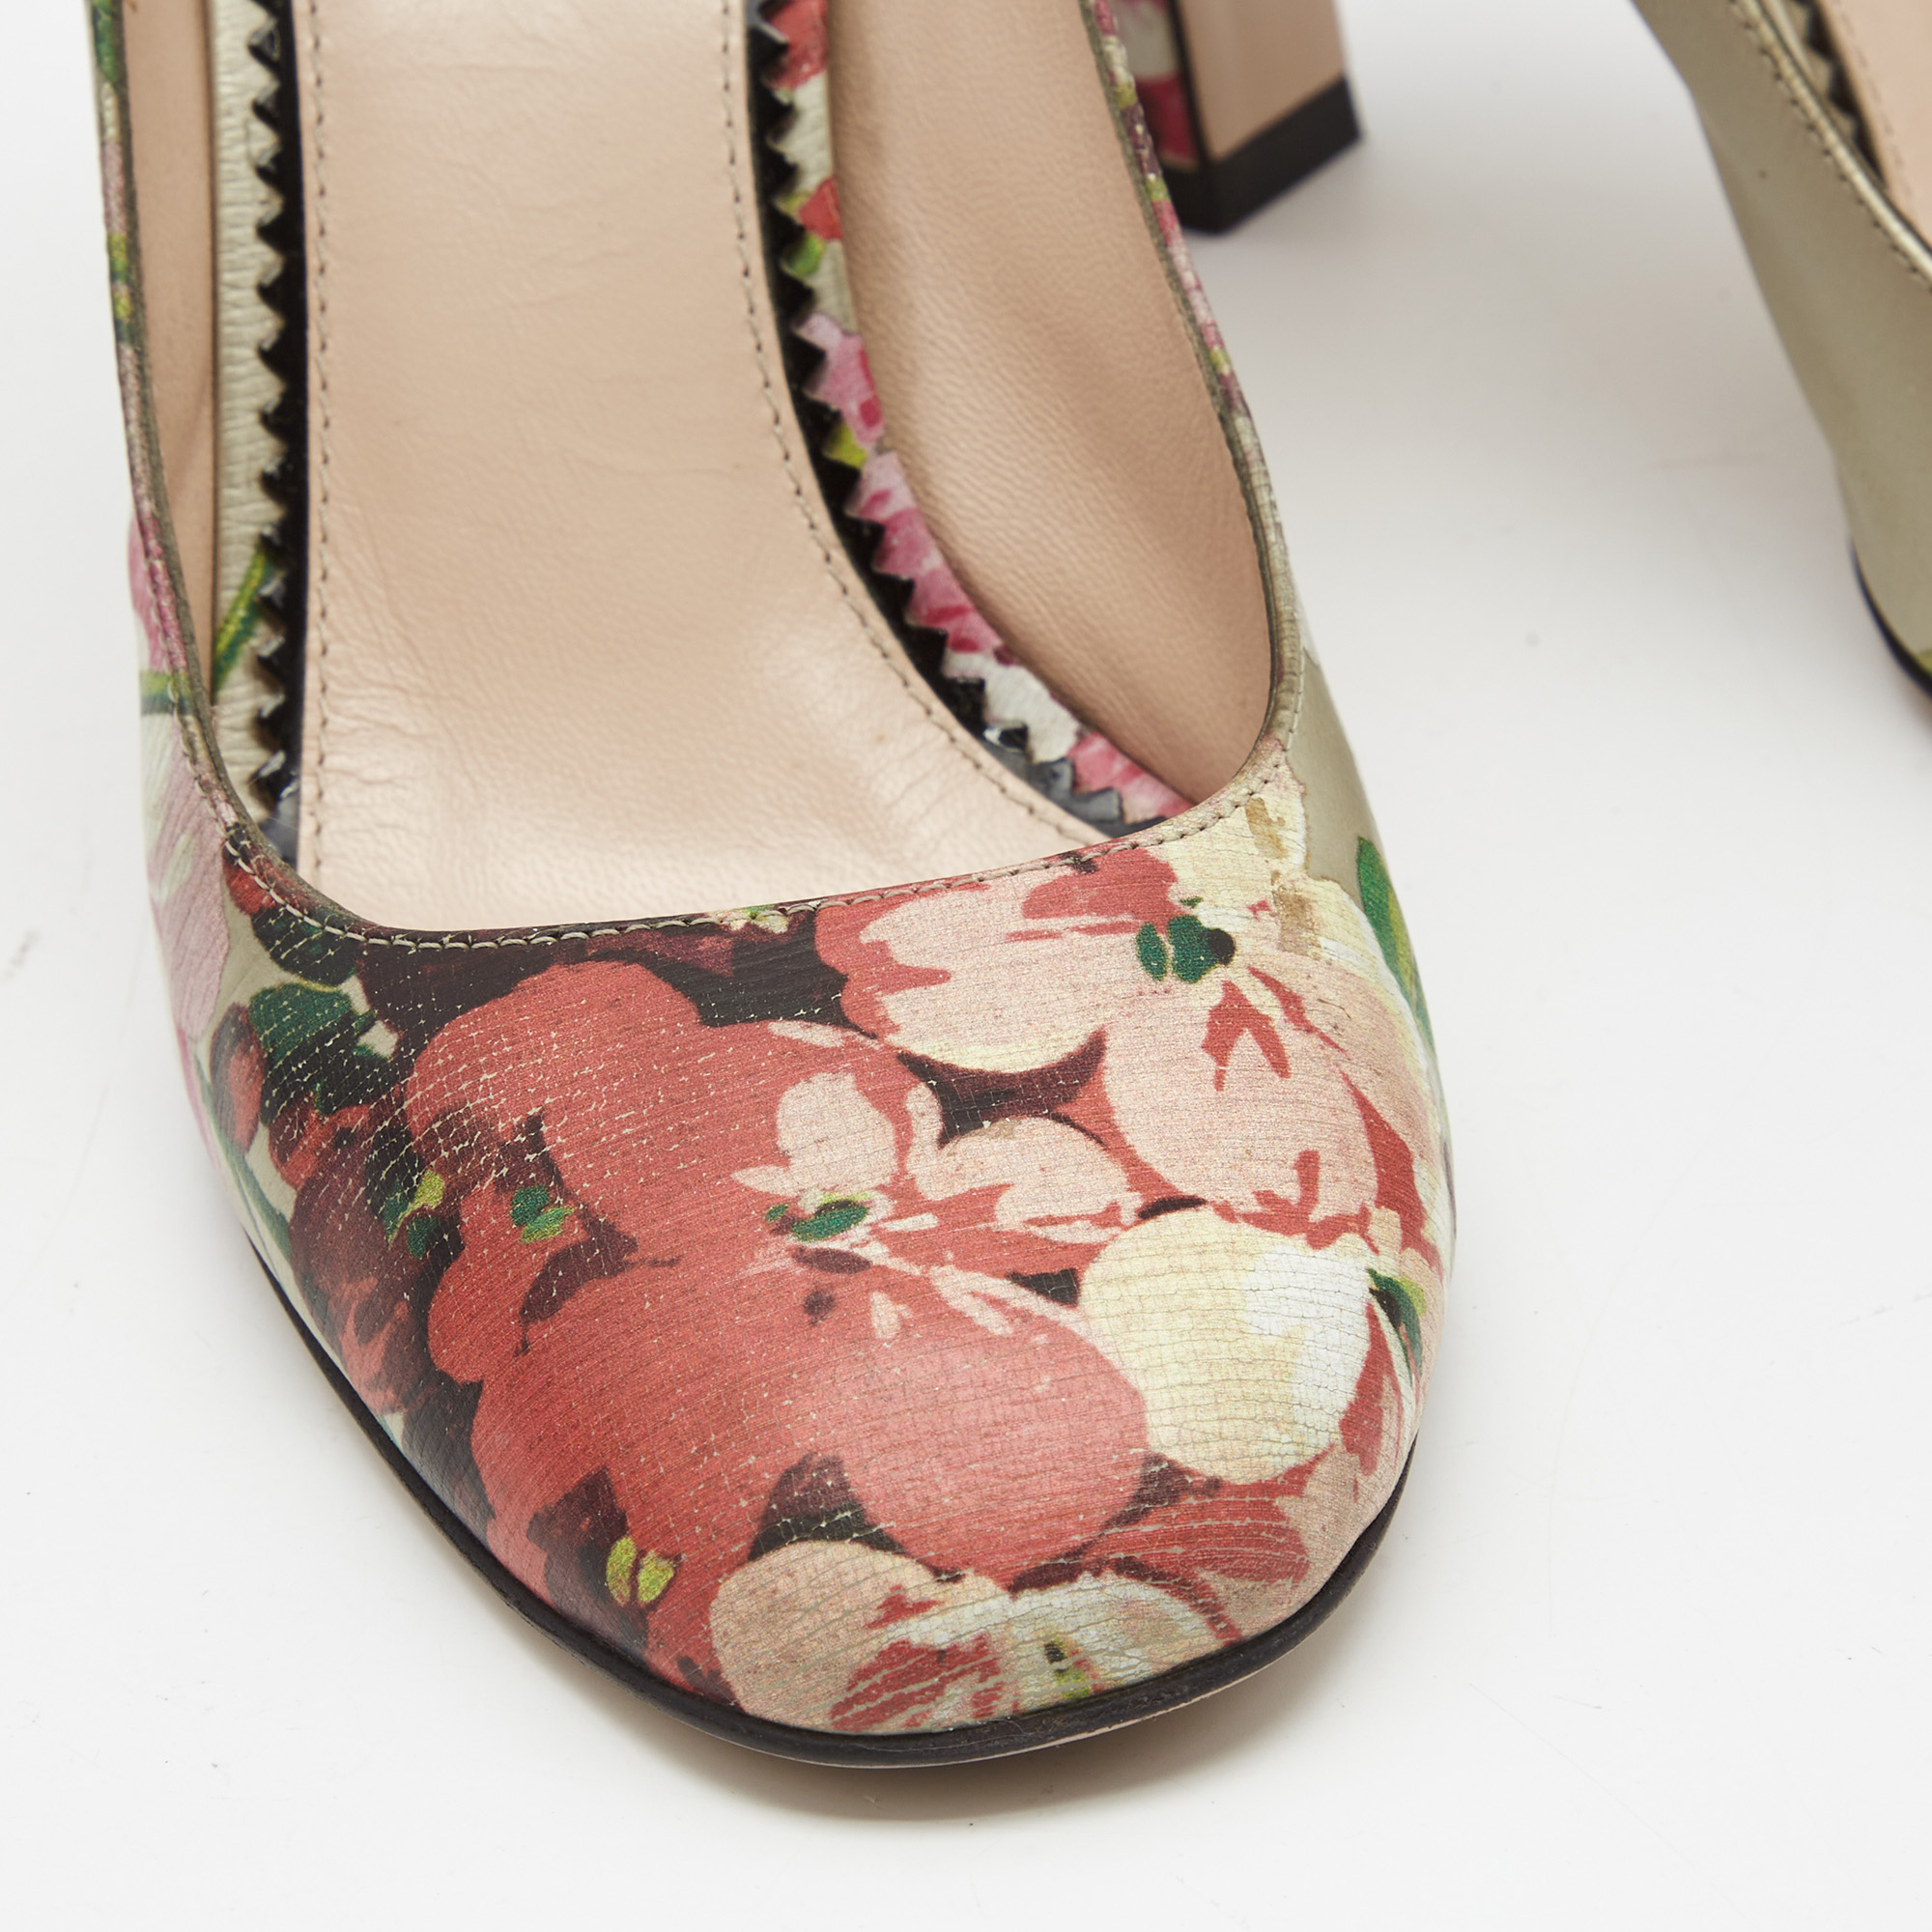 Gucci Multicolor Floral Leather Block Heel Pumps Size 37.5